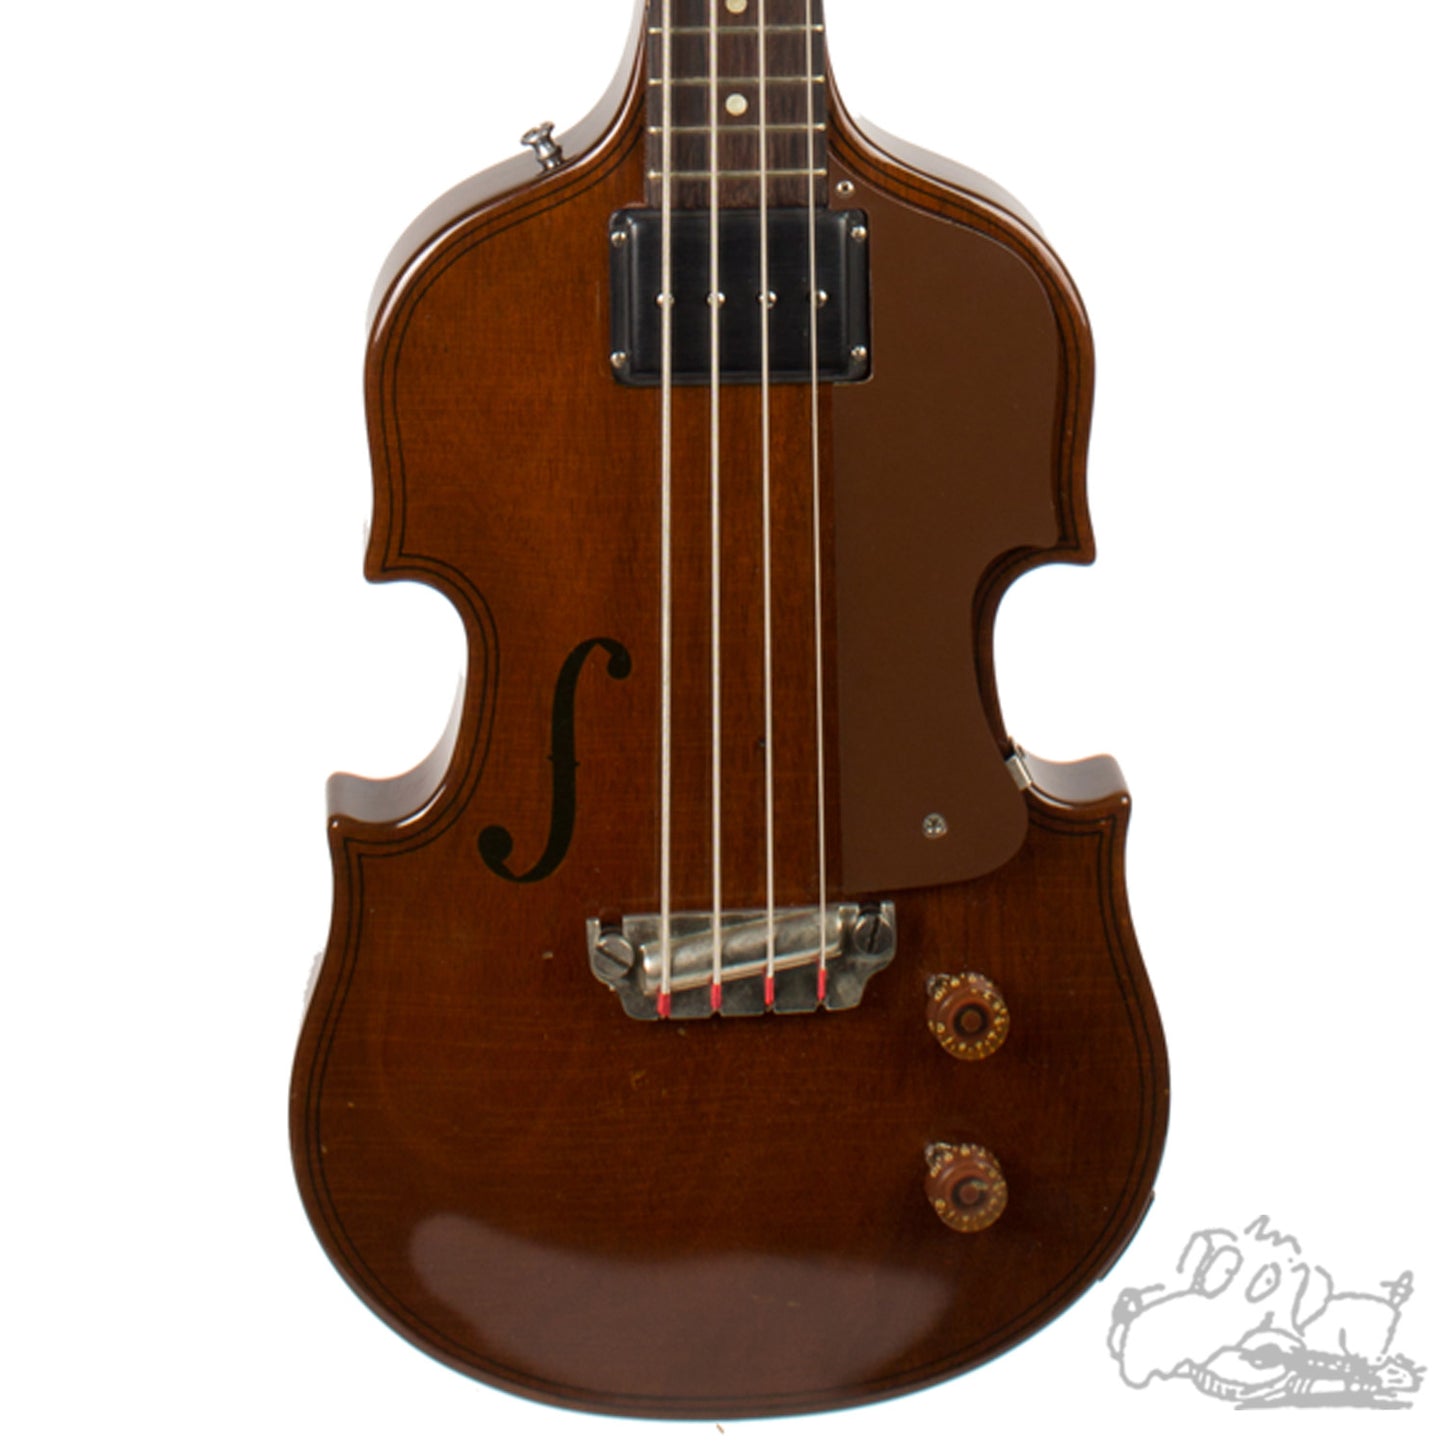 1958 Gibson EB-1 Bass